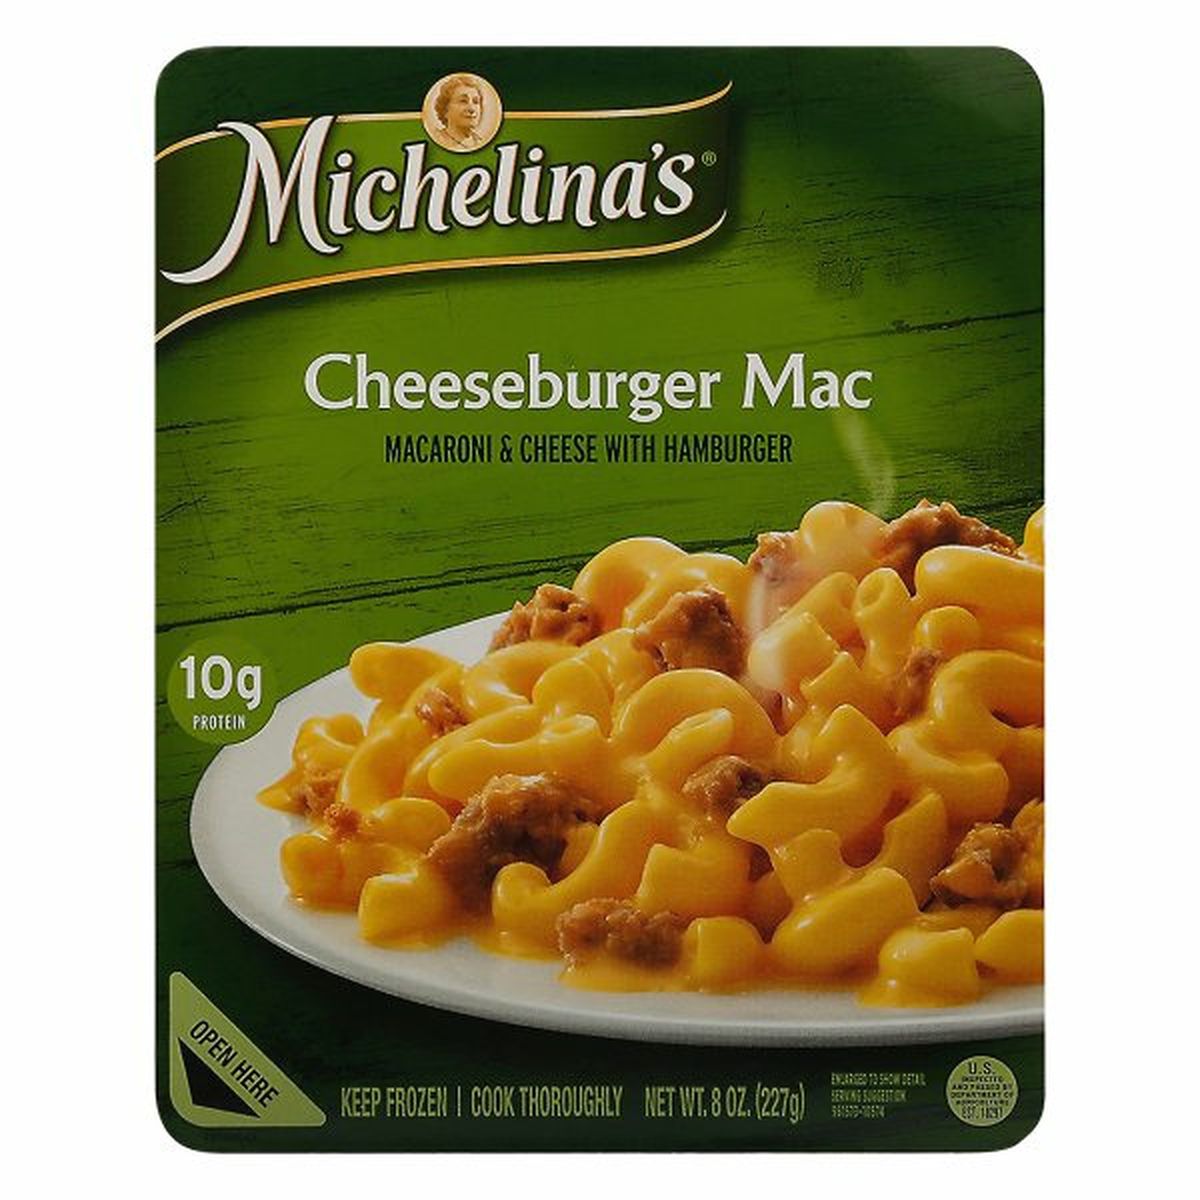 Calories in Michelina's Cheeseburger Mac